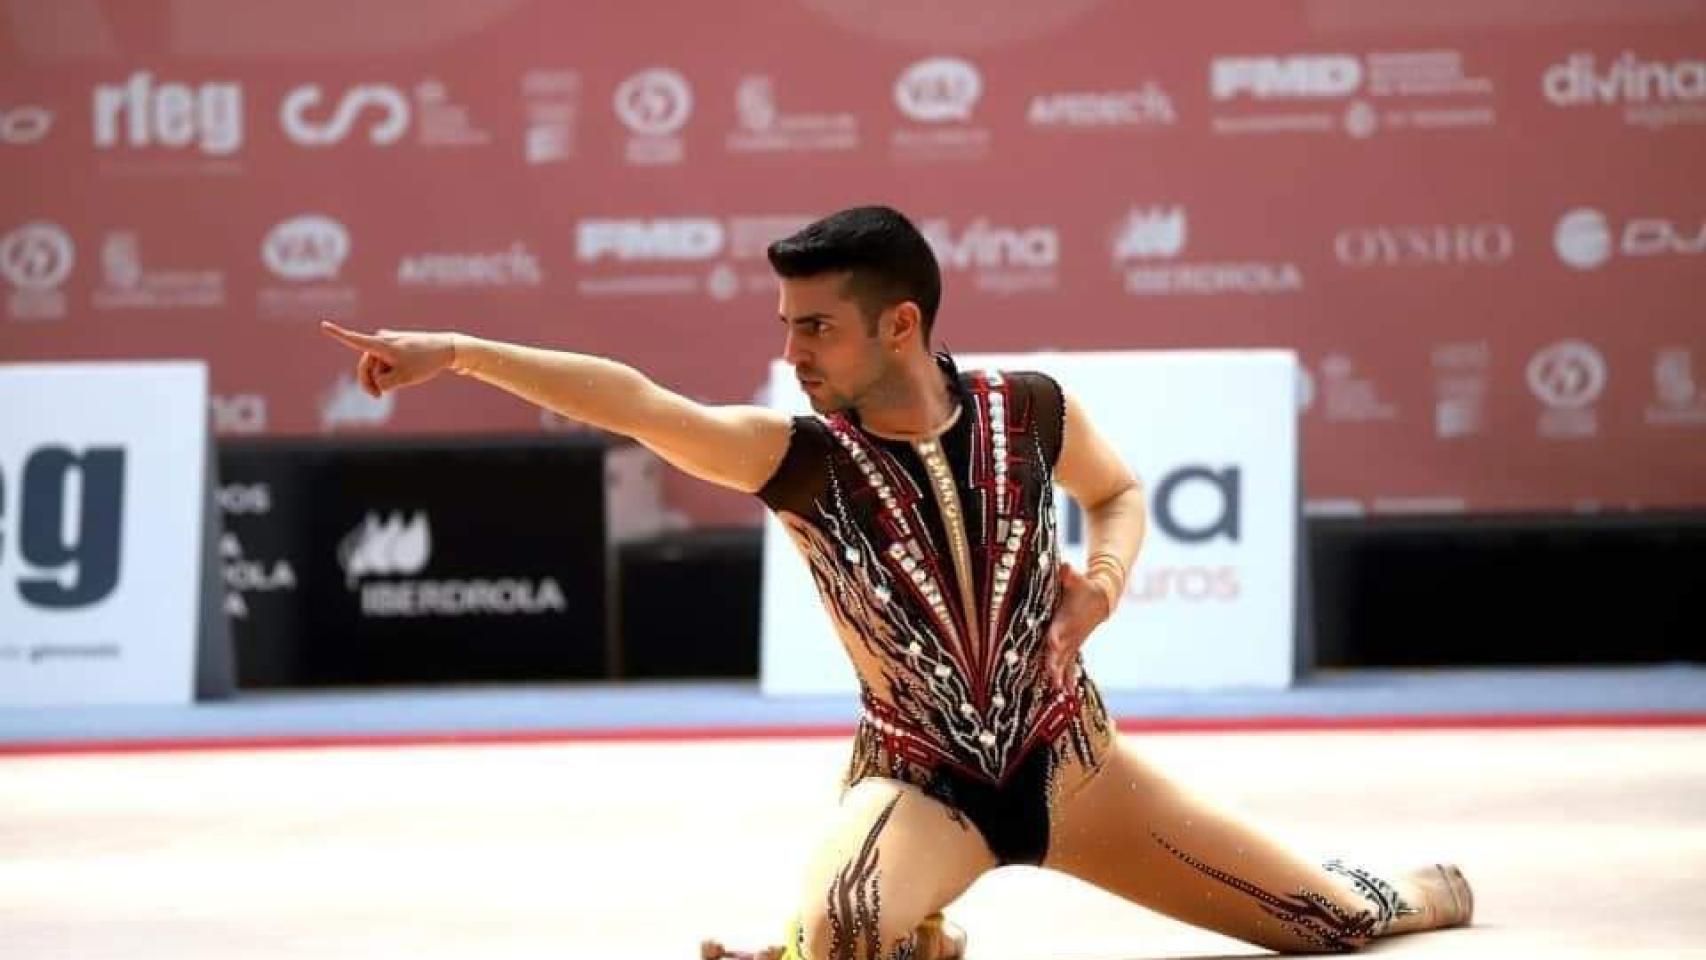 Cristofer Benítez, gimnasta español, víctima de un ataque sexista por parte de deportista